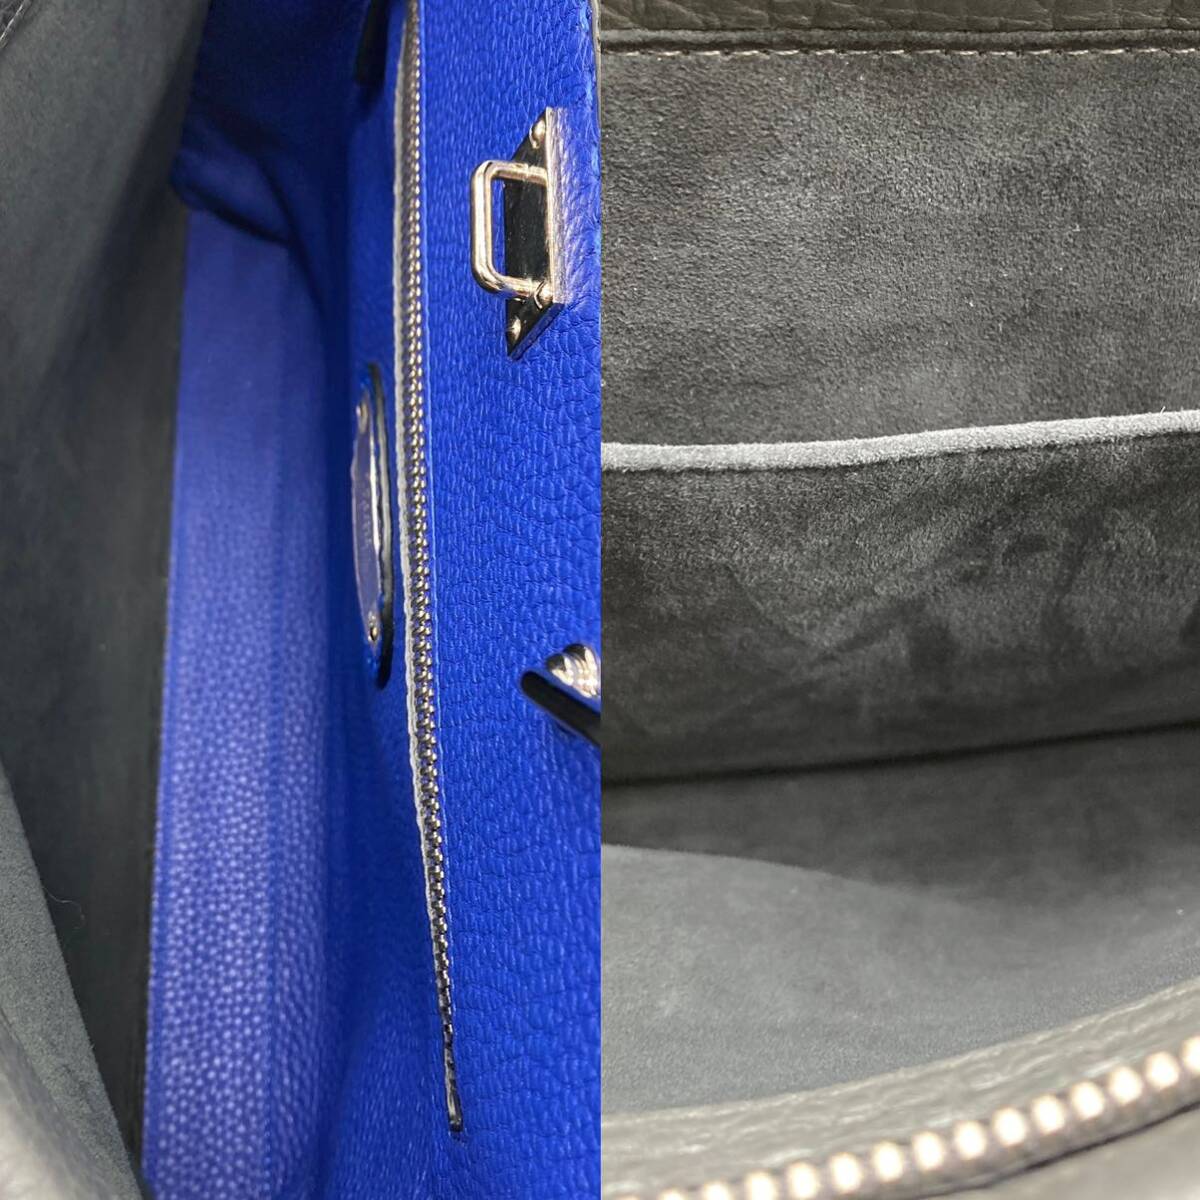 [ ultimate beautiful goods ]FENDI Fendi pi- Cub - selection rear Fit 2way business bag handbag shoulder bag shoulder .A4 gray leather 